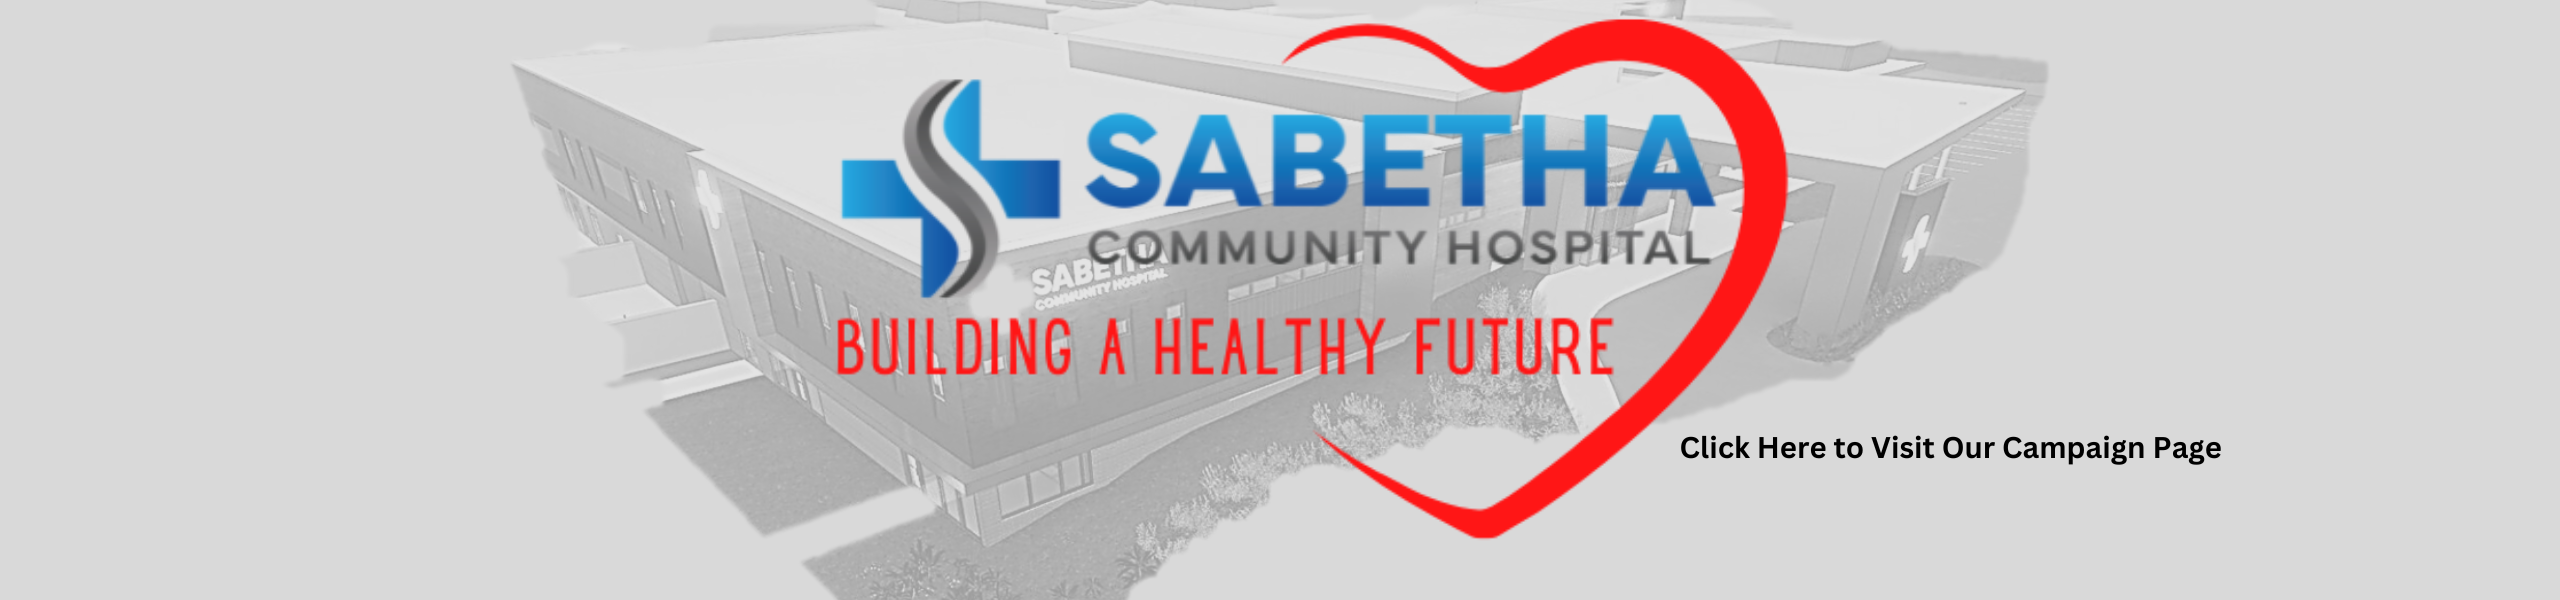 Sabetha Community Hospital 
Building A Healthy Future